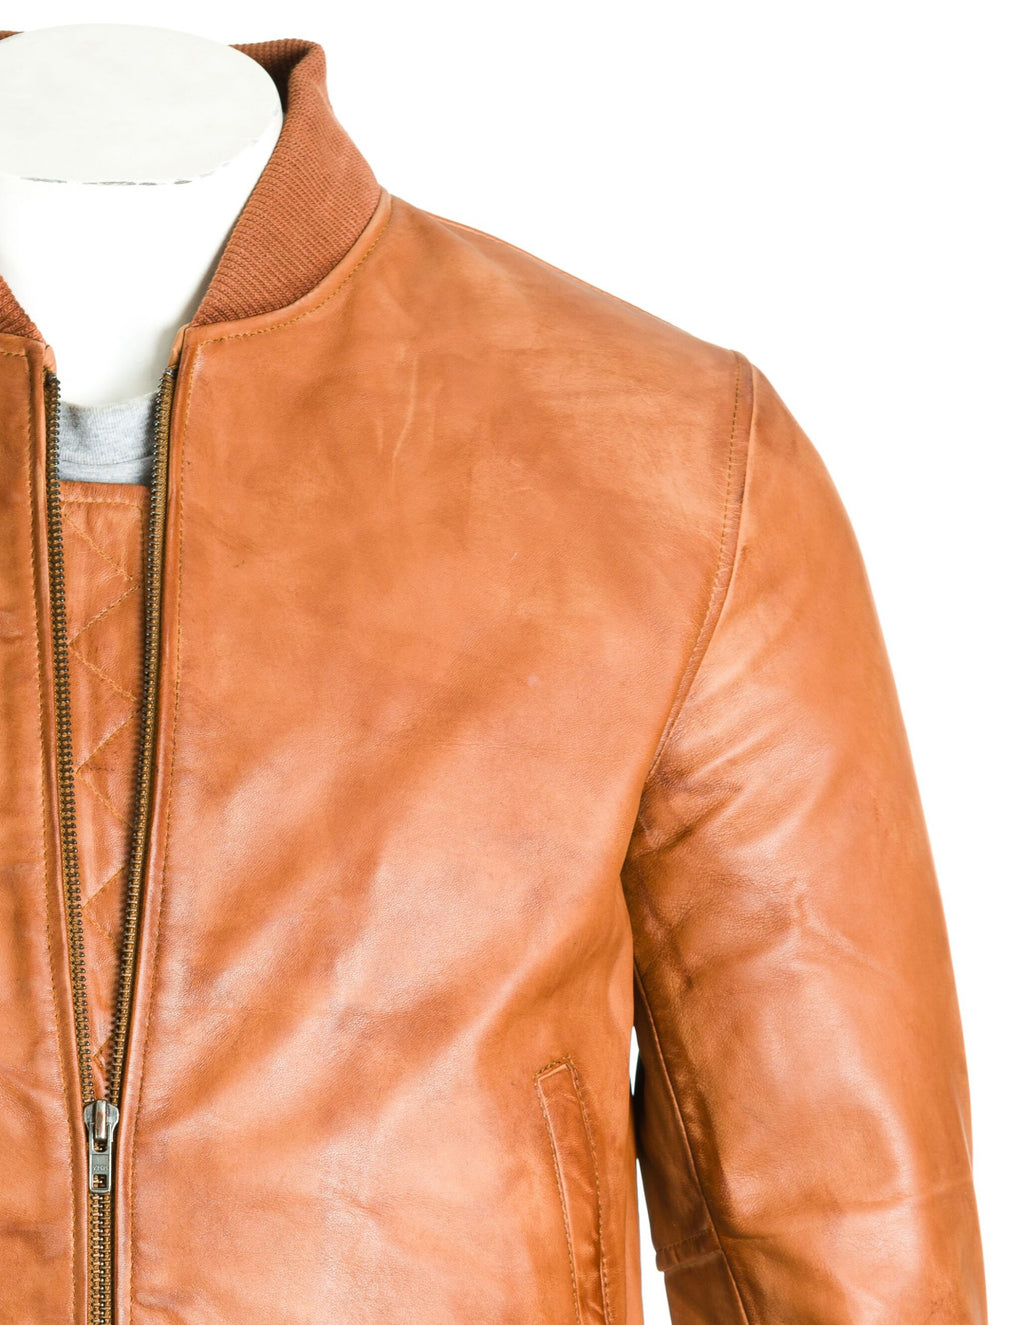 Men's Antique Tan Rib-Knit Collar Leather Bomber Jacket: Benedict